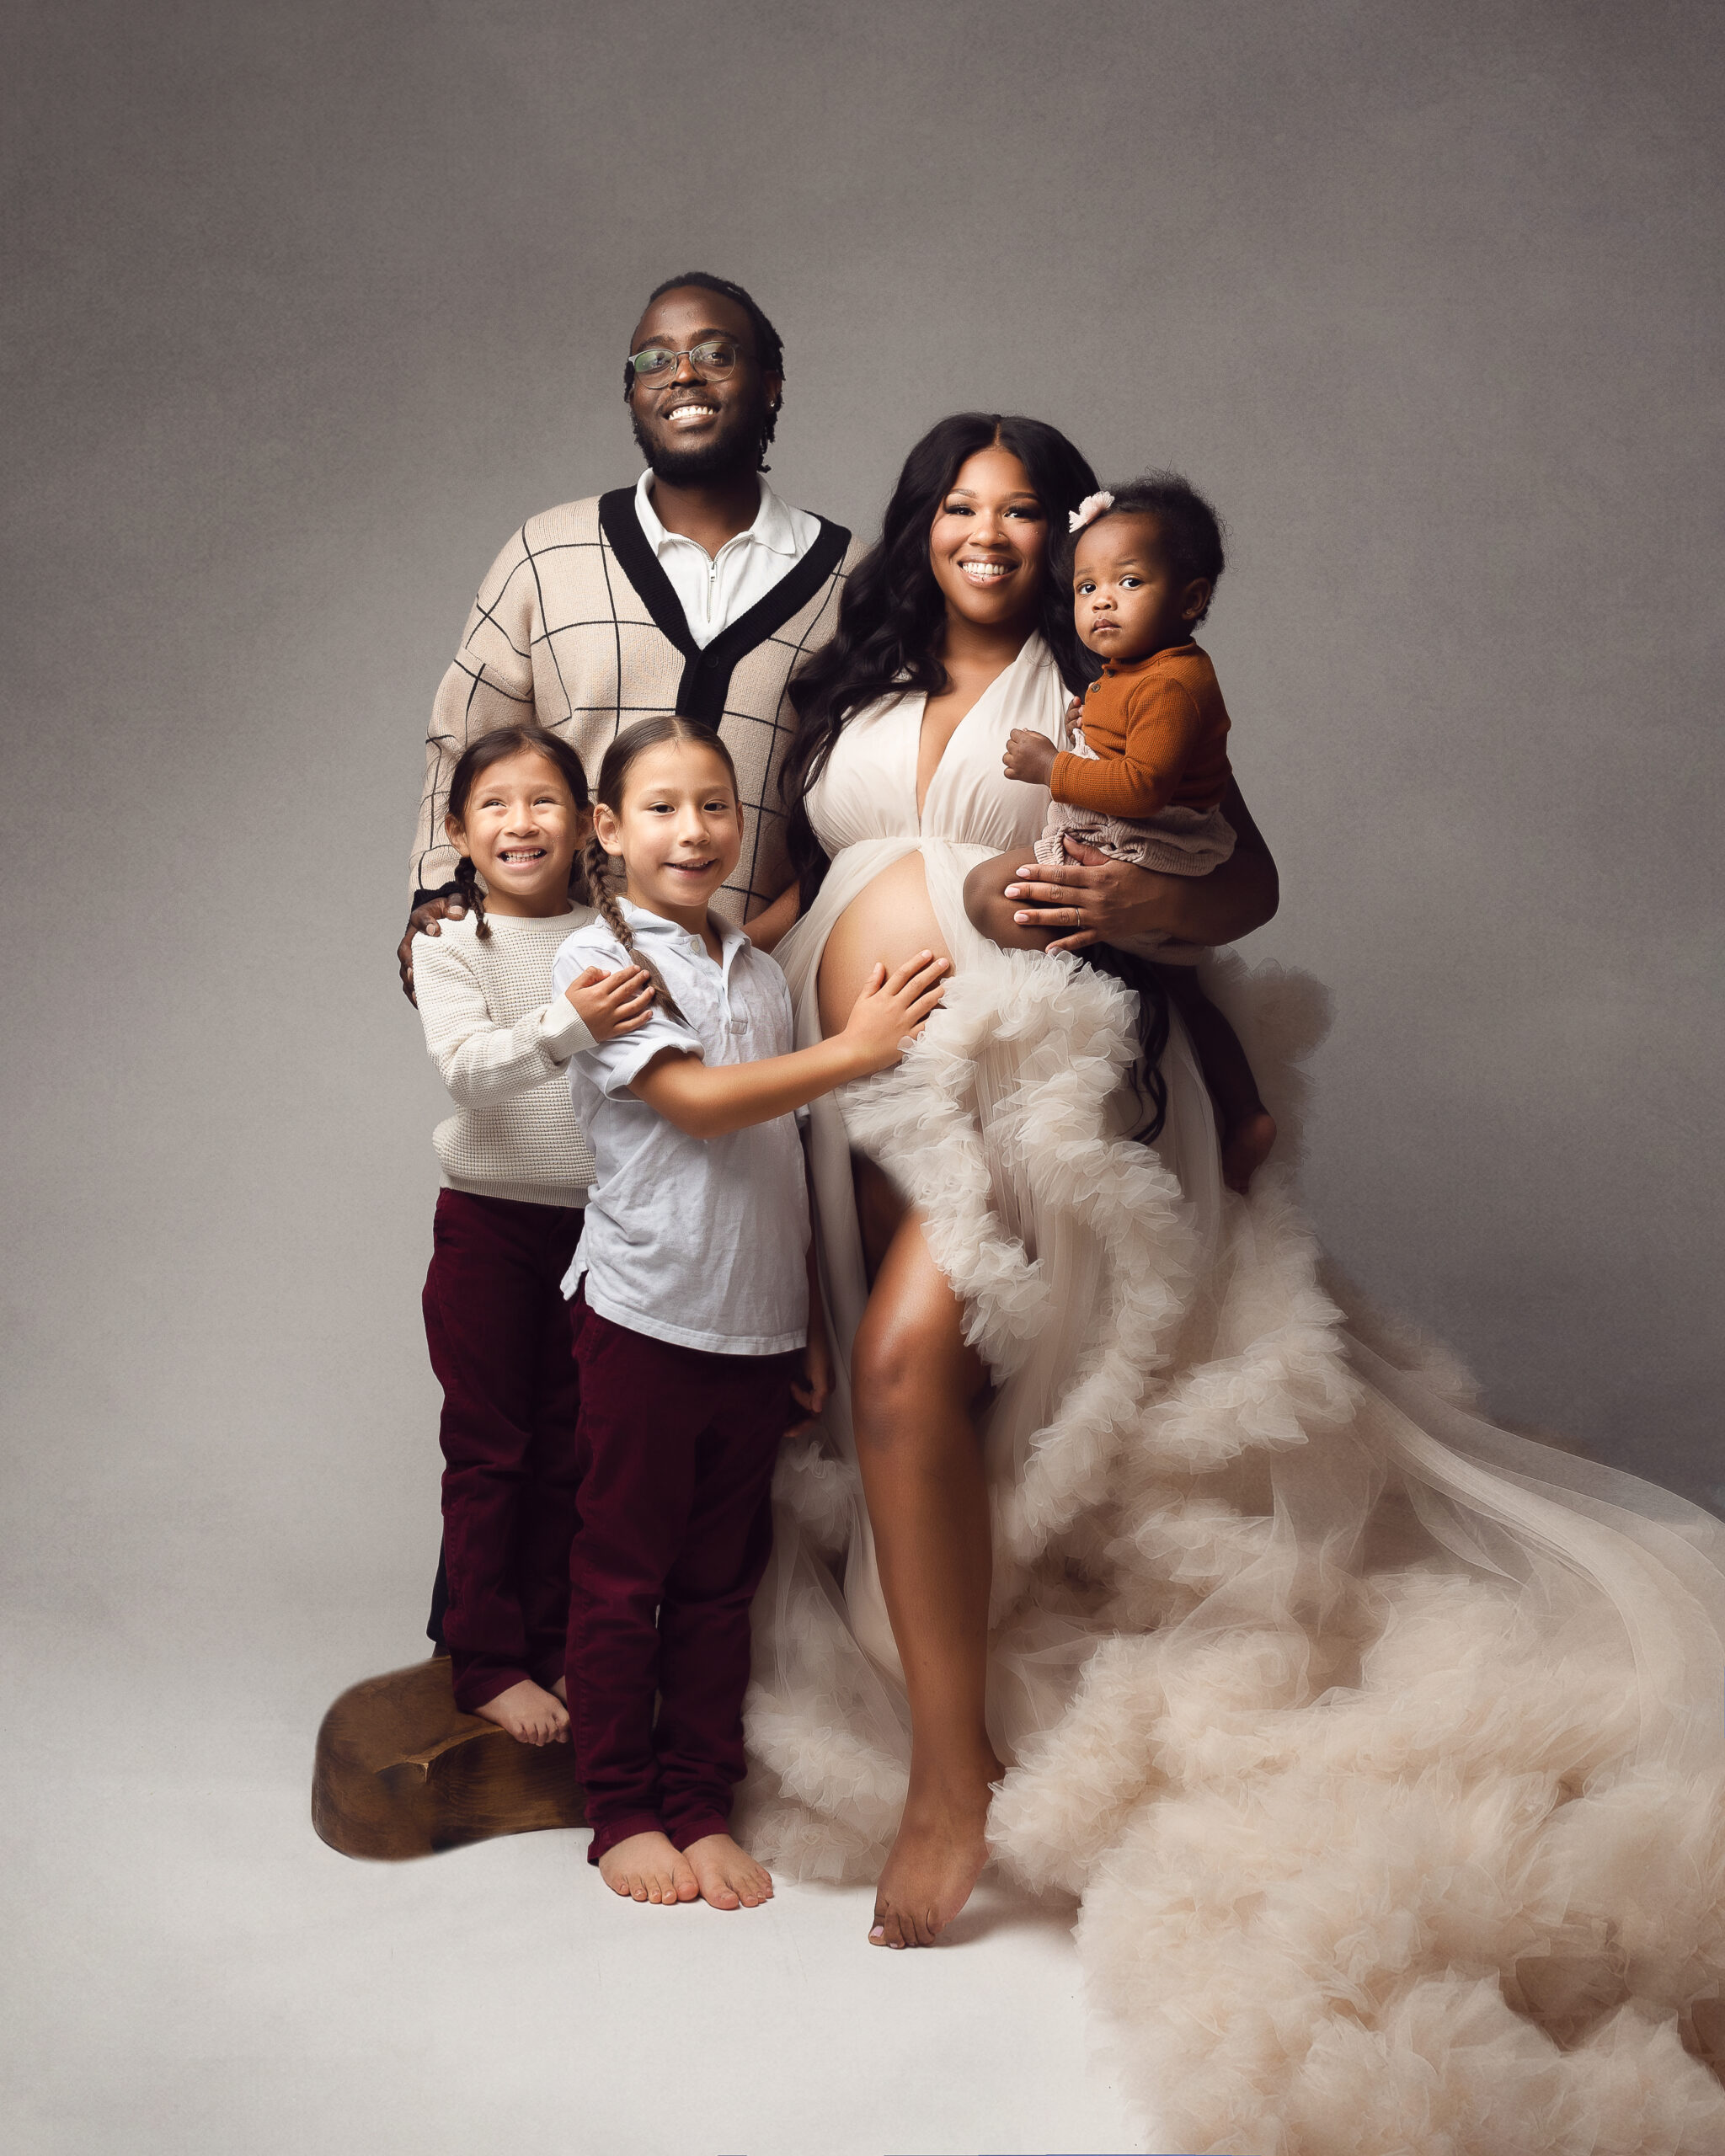 Yeg family at their maternity photoshoot